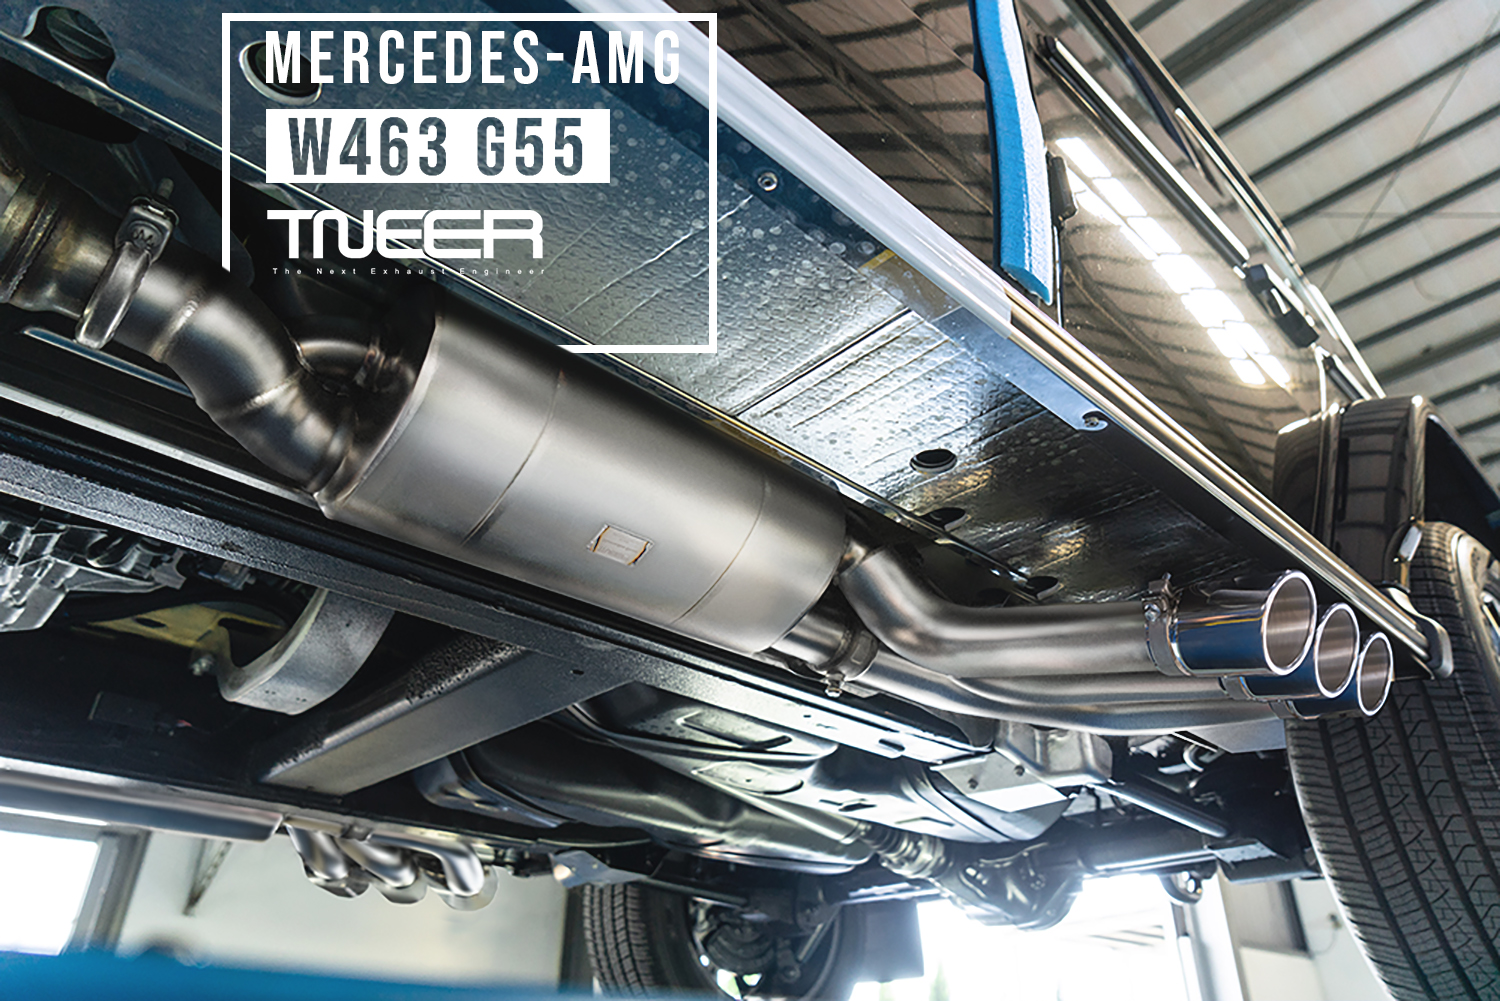 Mercedes-AMG W463 G55 (M113) TNEER Performance Exhaust System